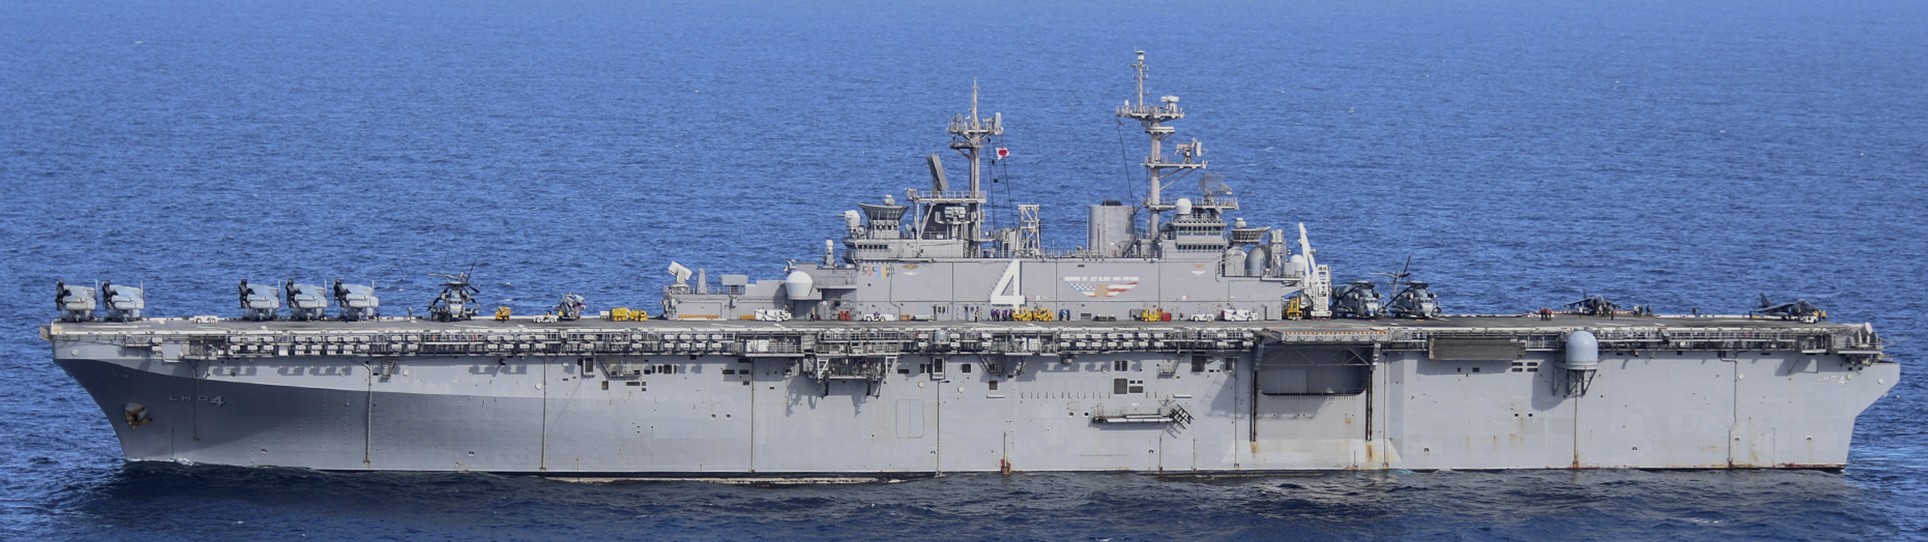 lhd-4 uss boxer wasp class amphibious assault ship landing helicopter dock us navy vmm-163 marines 133